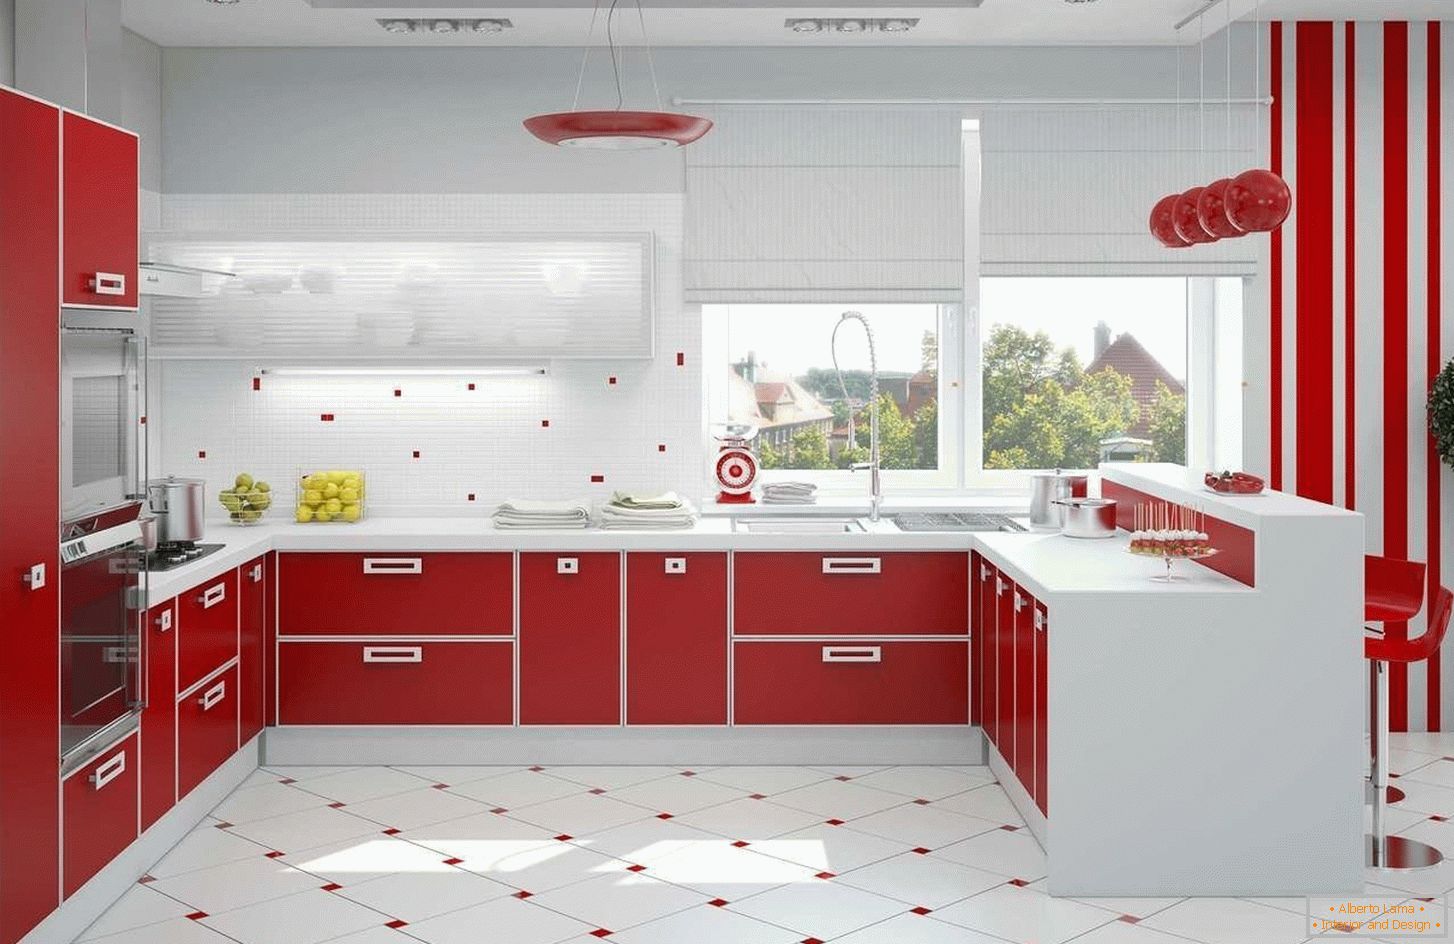 Red and white kitchen interior